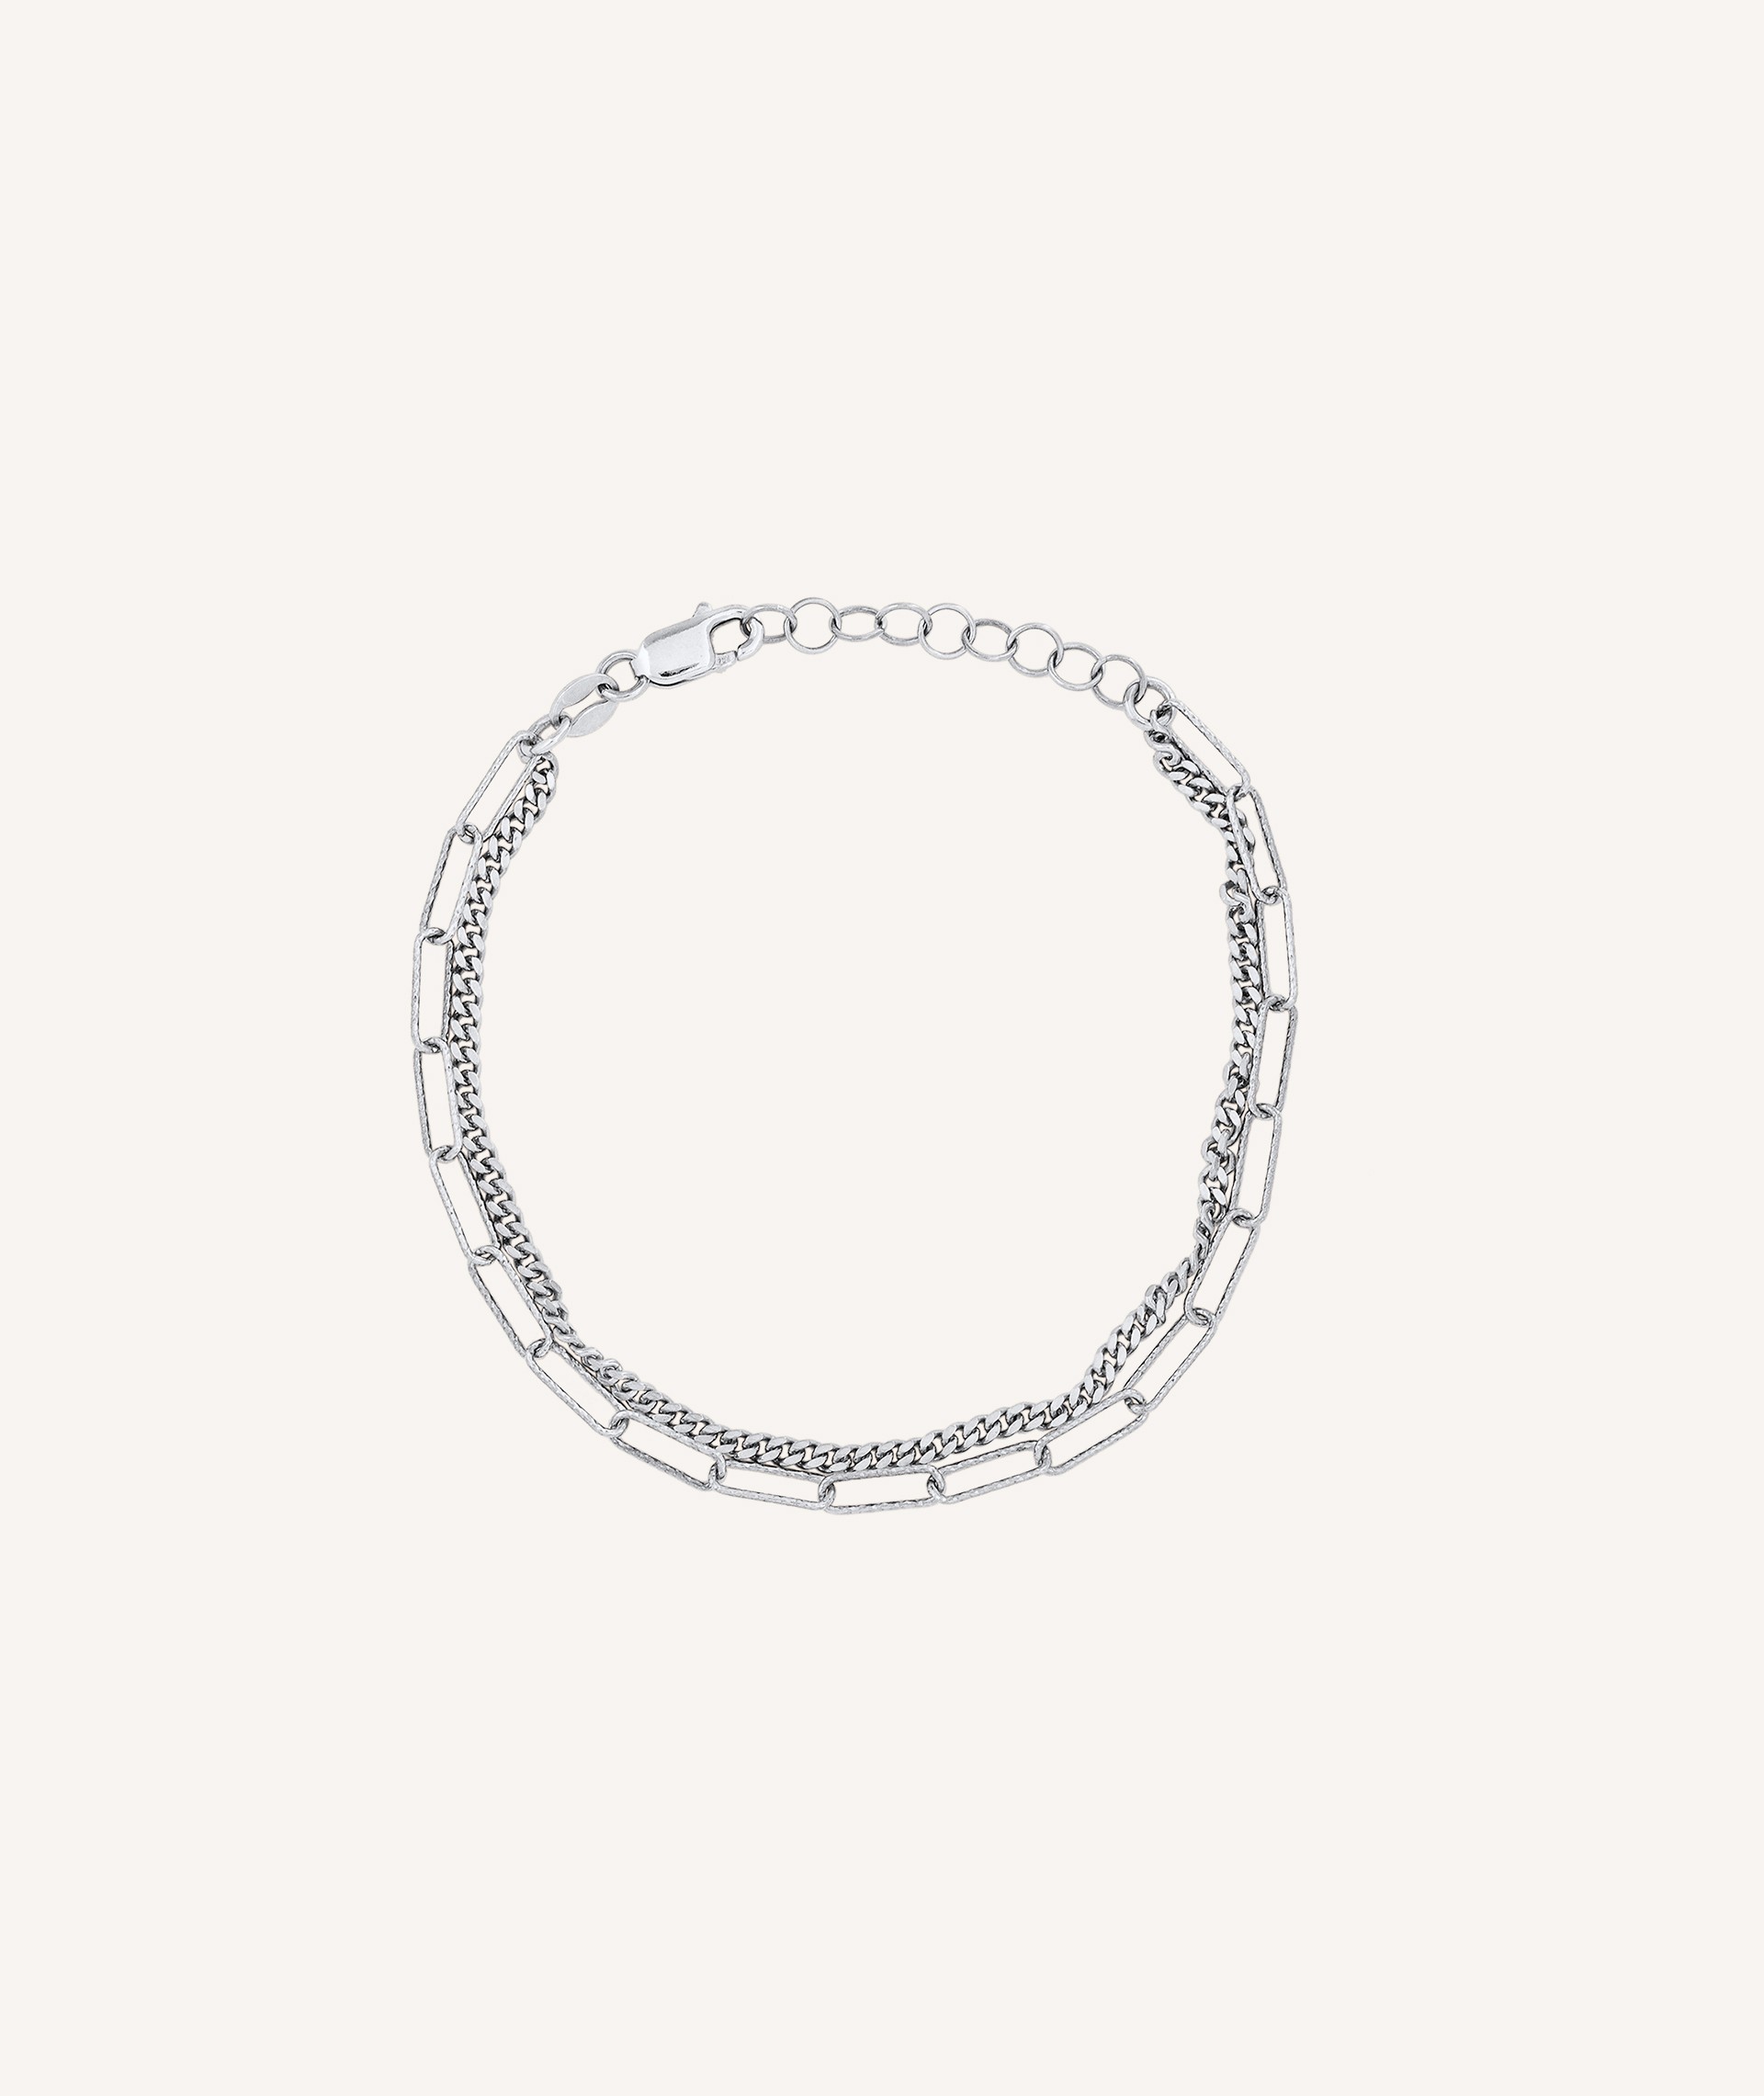 Bracelet Cherish silver 925 double chain links